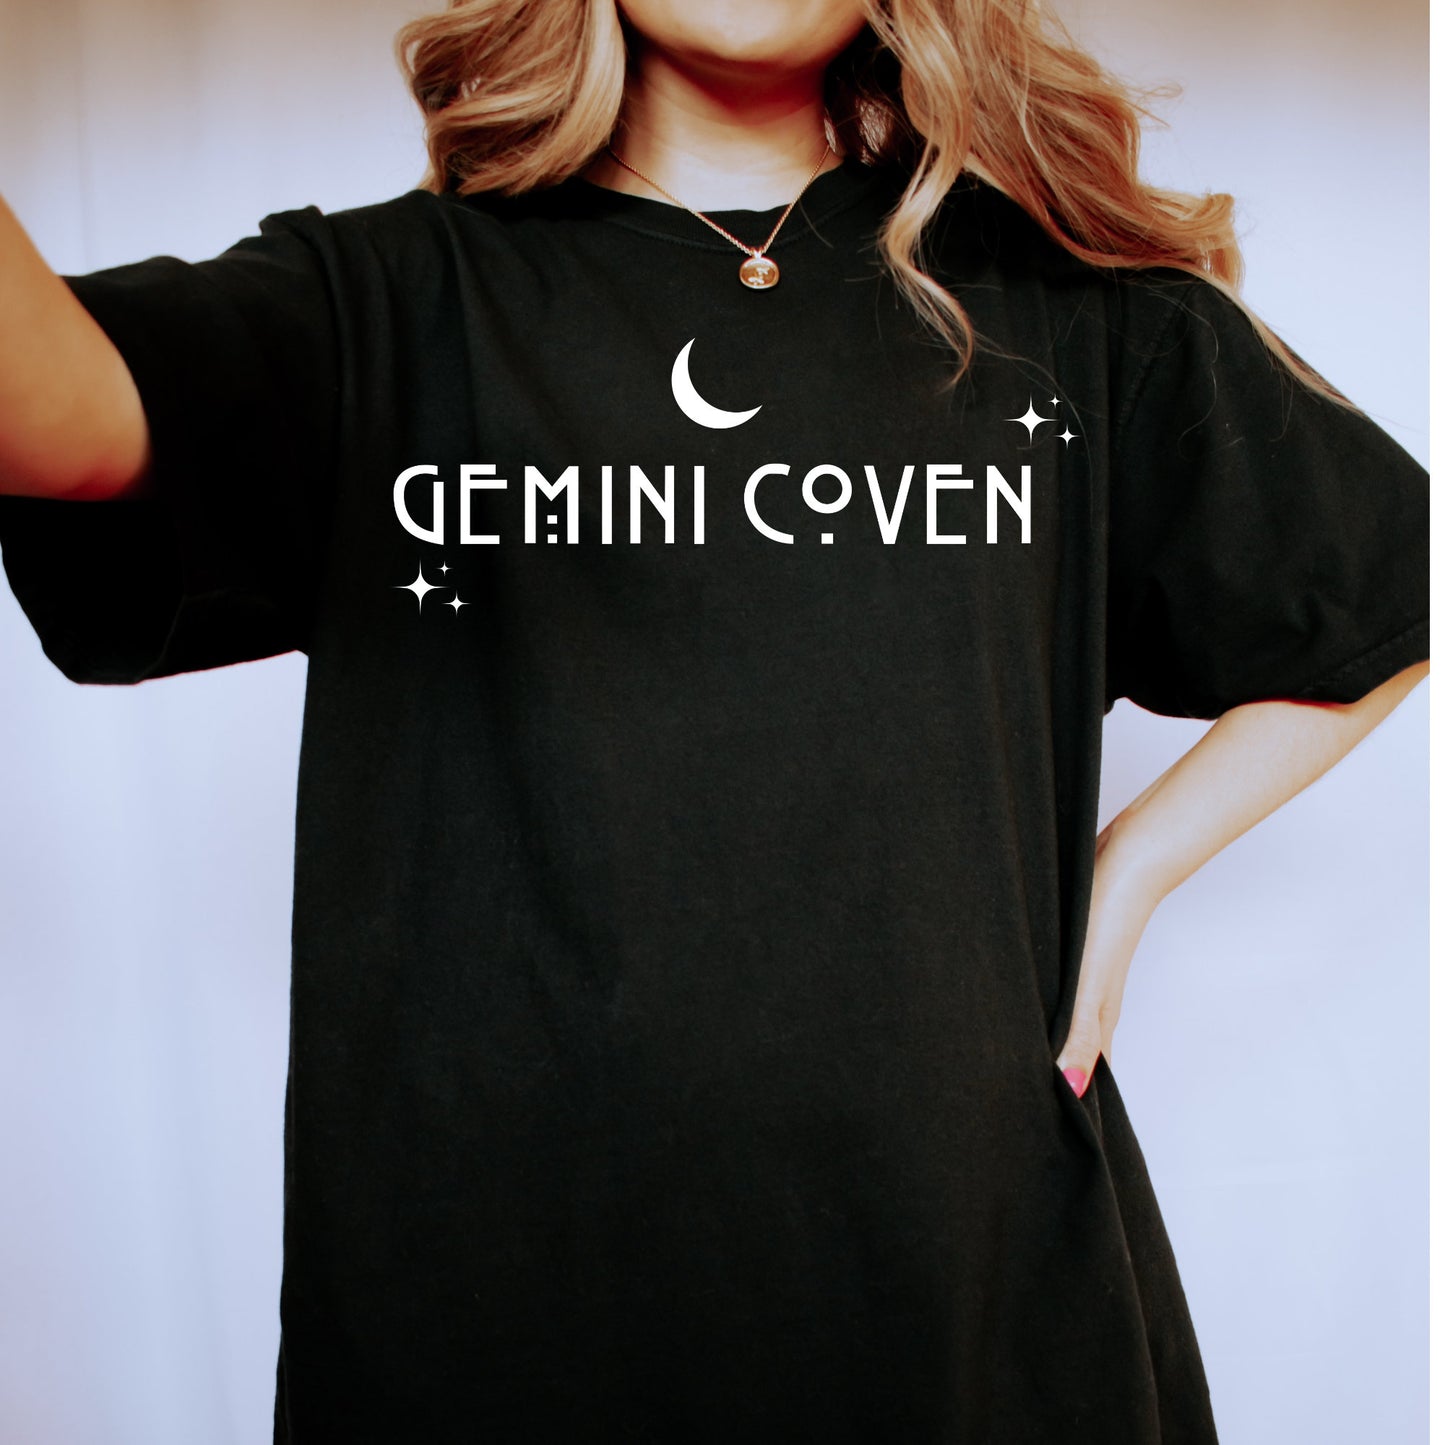 Gemini coven shirt, tvd shirt, TVD fan gift, vampire shirt, The Vampire Diaries shirt, TVD Fan, TVD merch